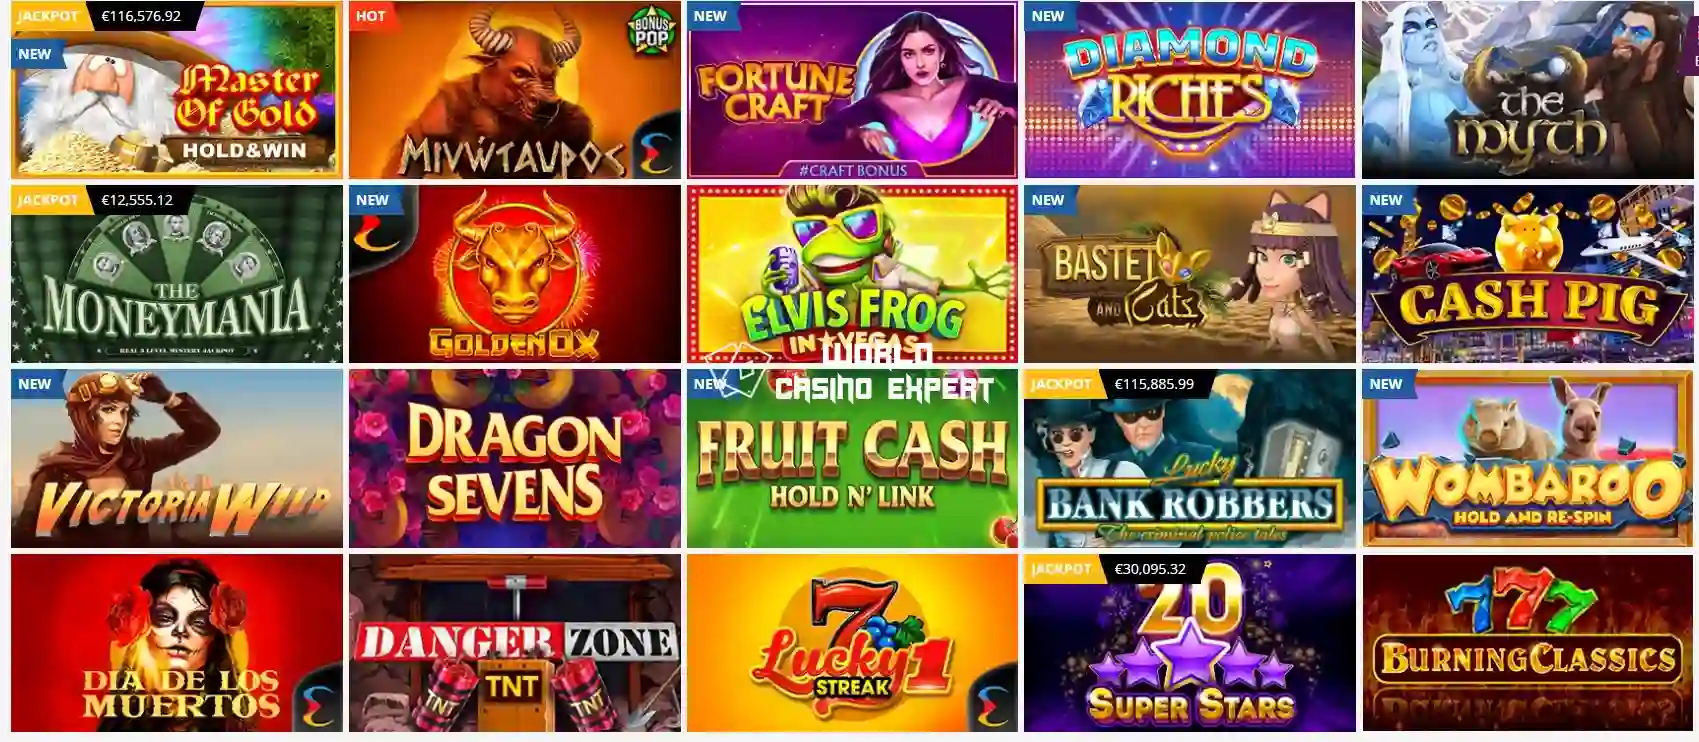 Games in Online Casino Playamo | worldcasinoexpert.com